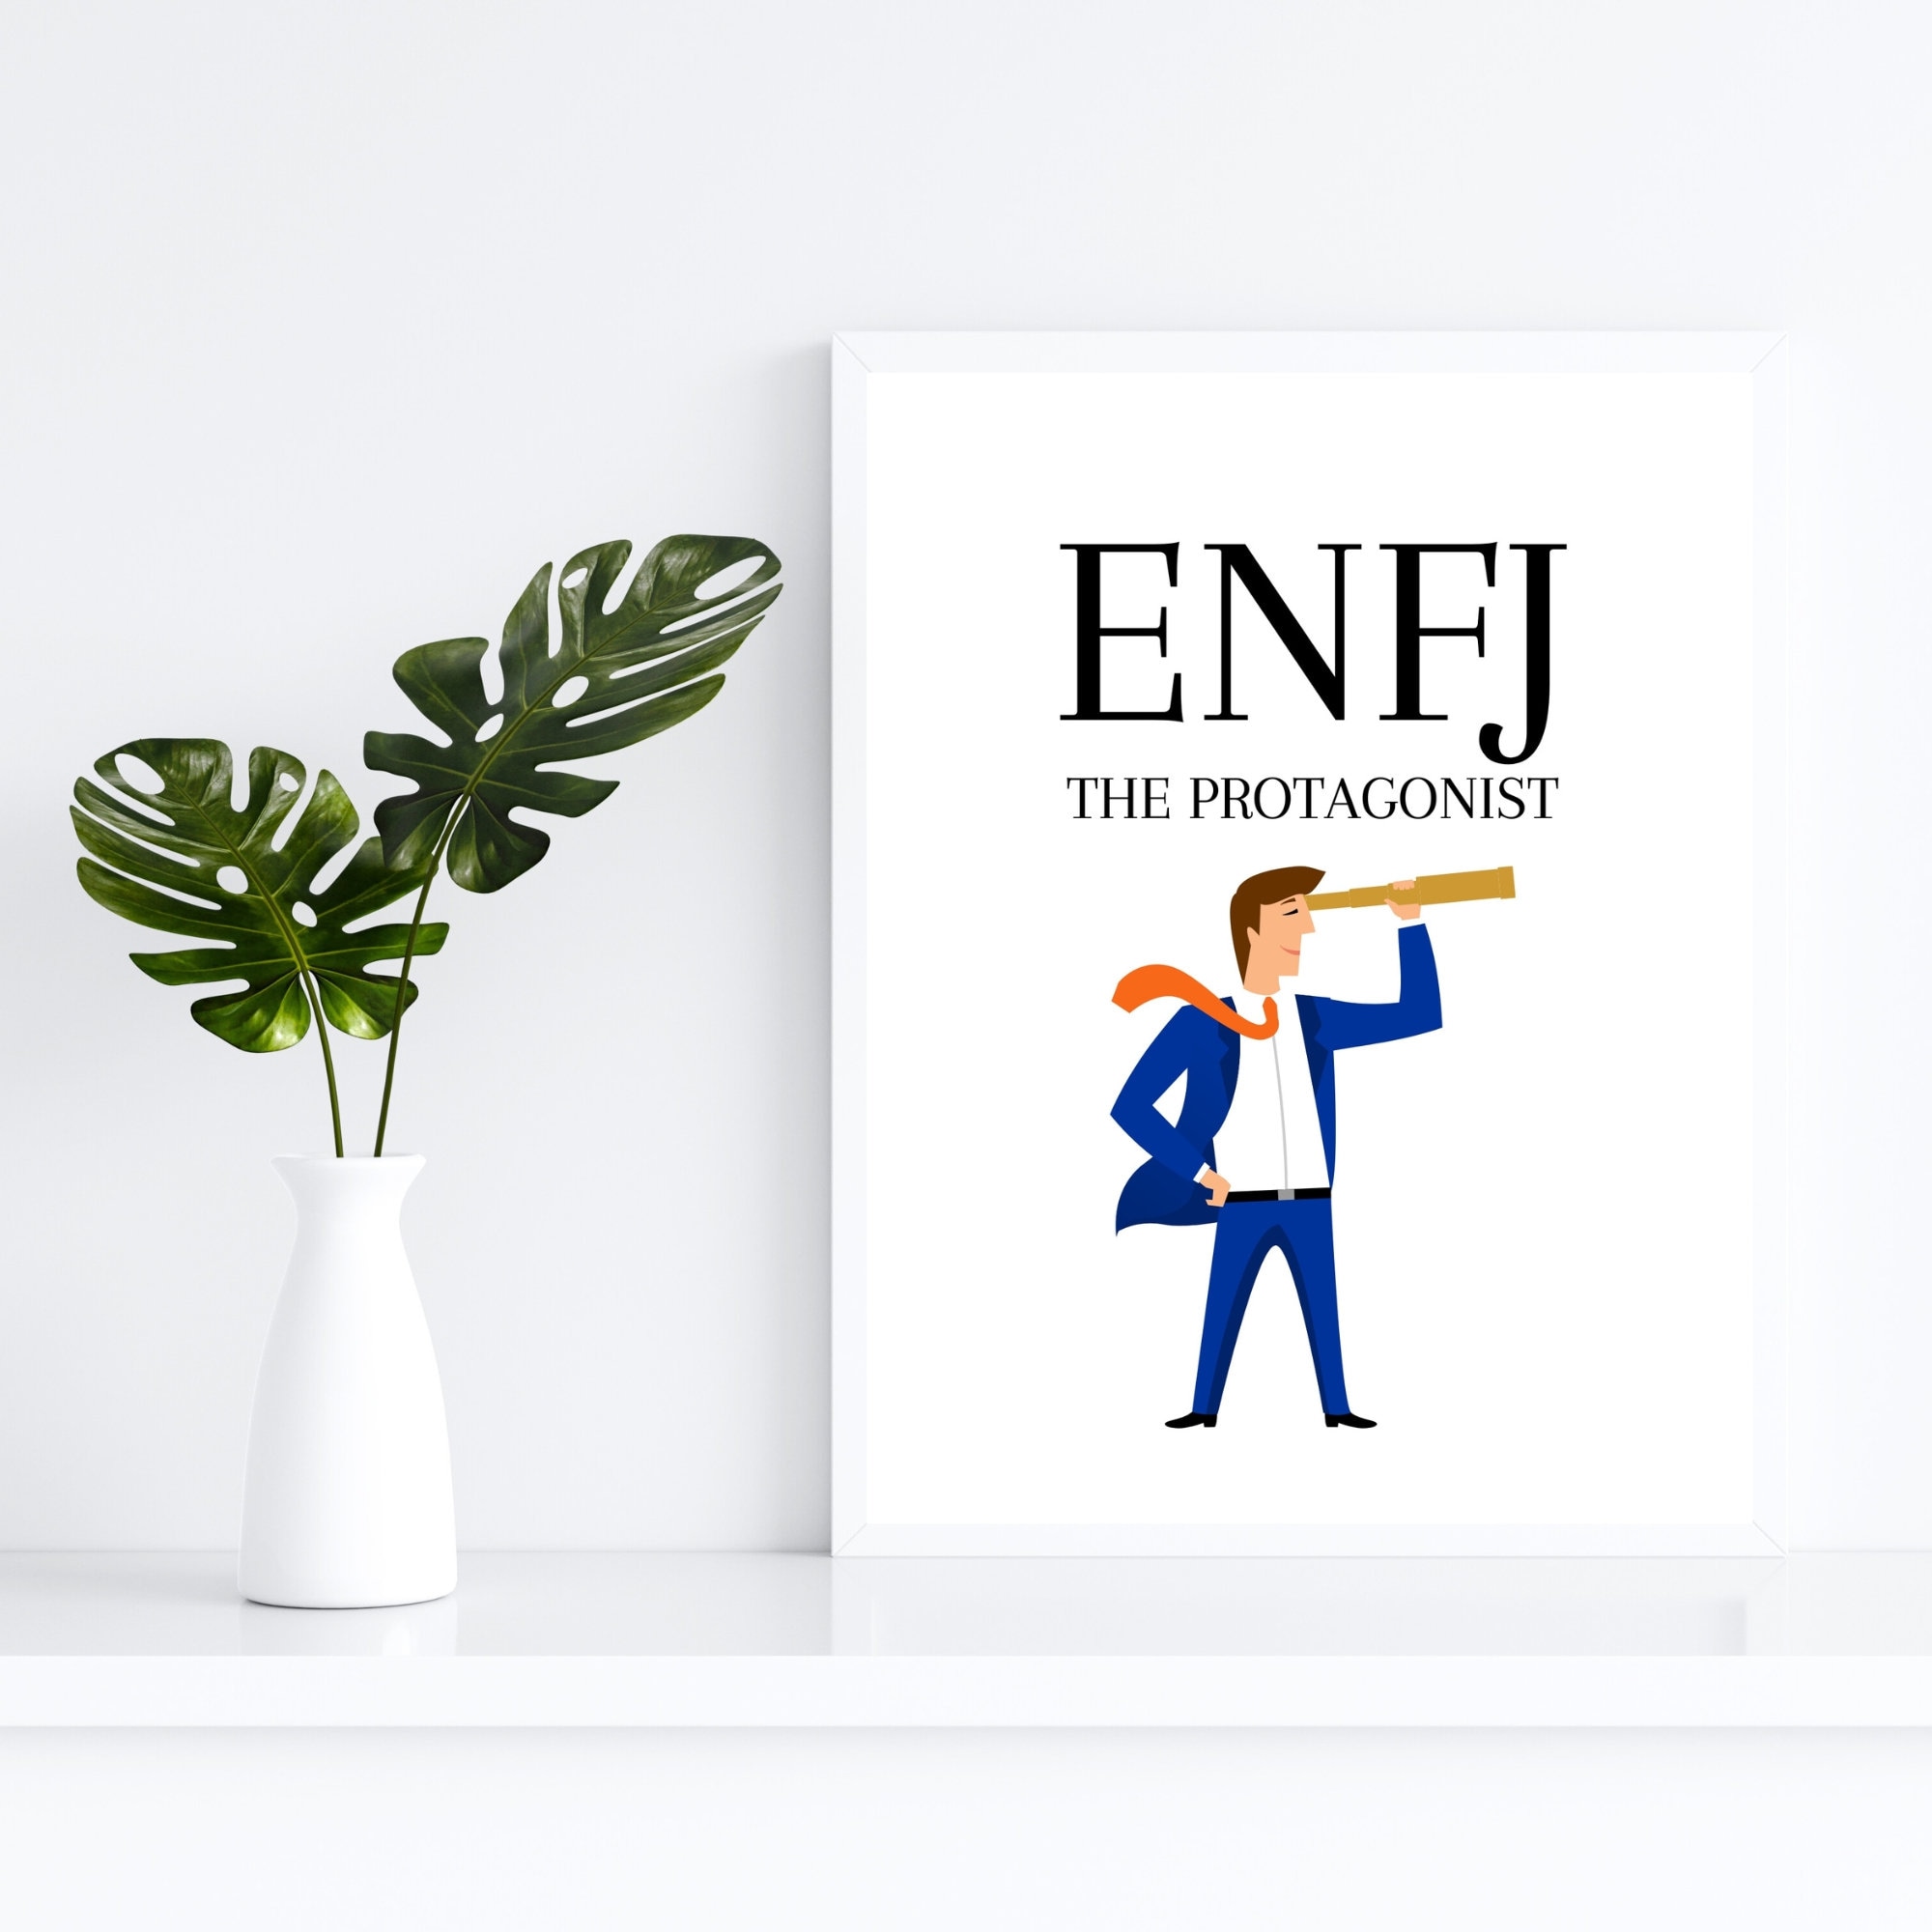 ENFJ - MBTI Protagonist Personality Art Board Print for Sale by BrainChaos